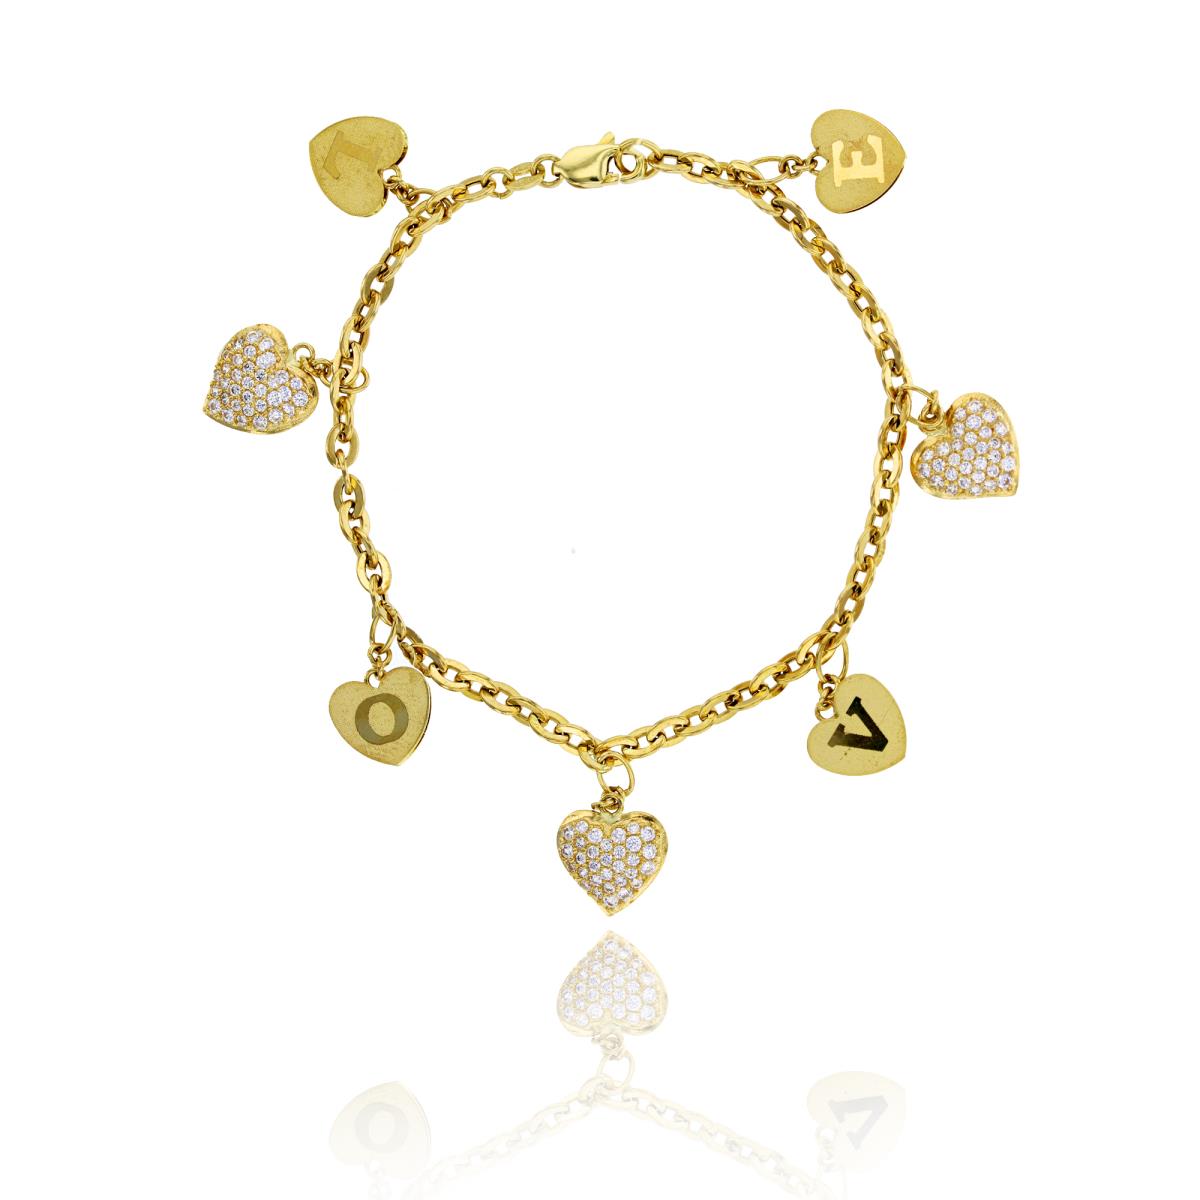 14K Yellow Gold LOVE Heart Charm 7.25" Bracelet with Swarovski Crystal